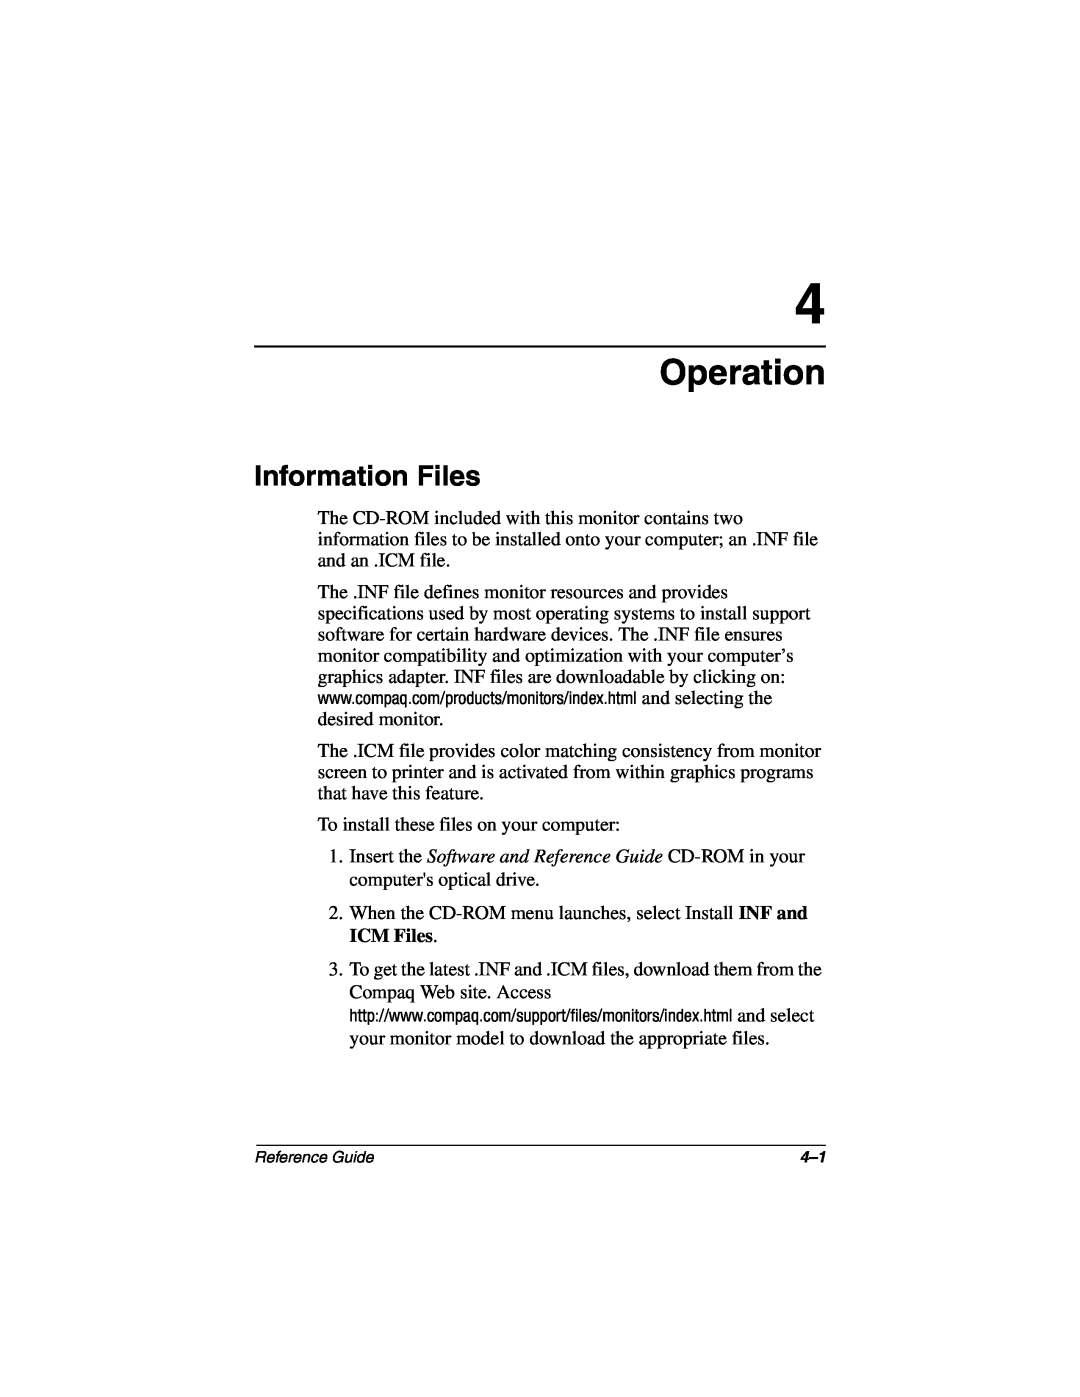 Compaq 5017 manual Operation, Information Files 